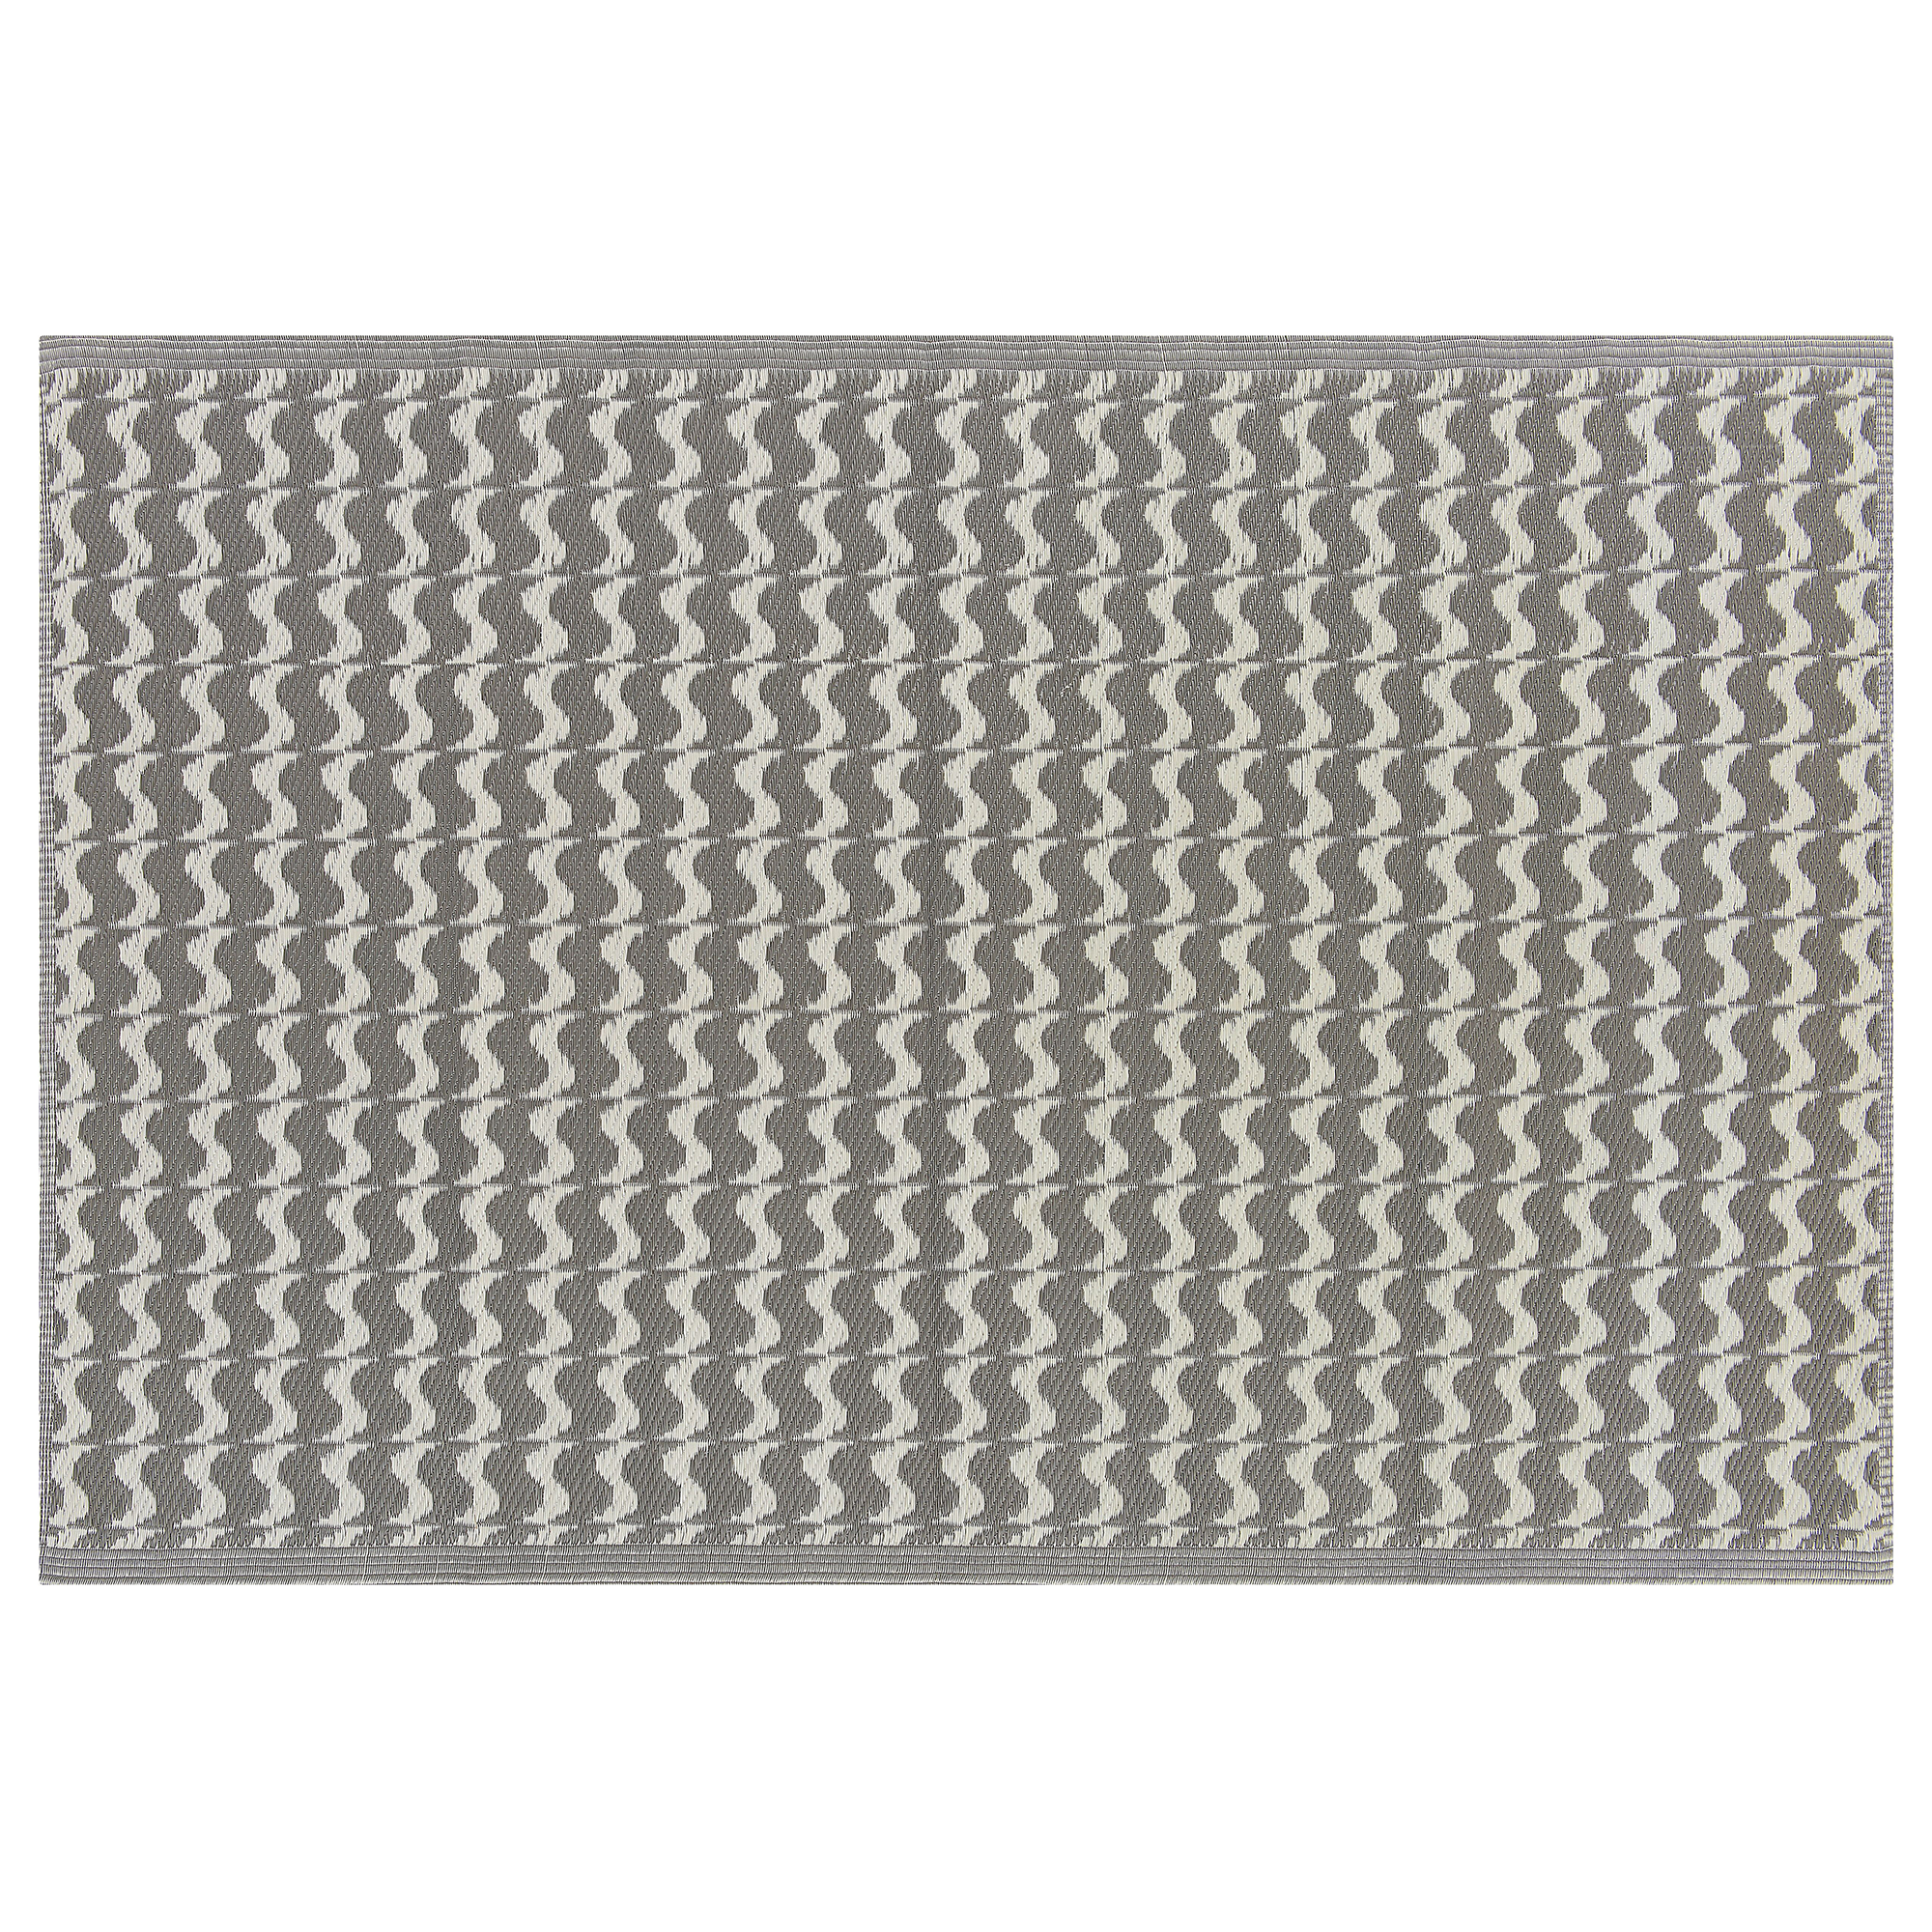 Beliani Outdoor Area Rug Grey Synthetic Materials Rectangular 120 x 180 cm Geometric Wavy Pattern Balcony Accessories